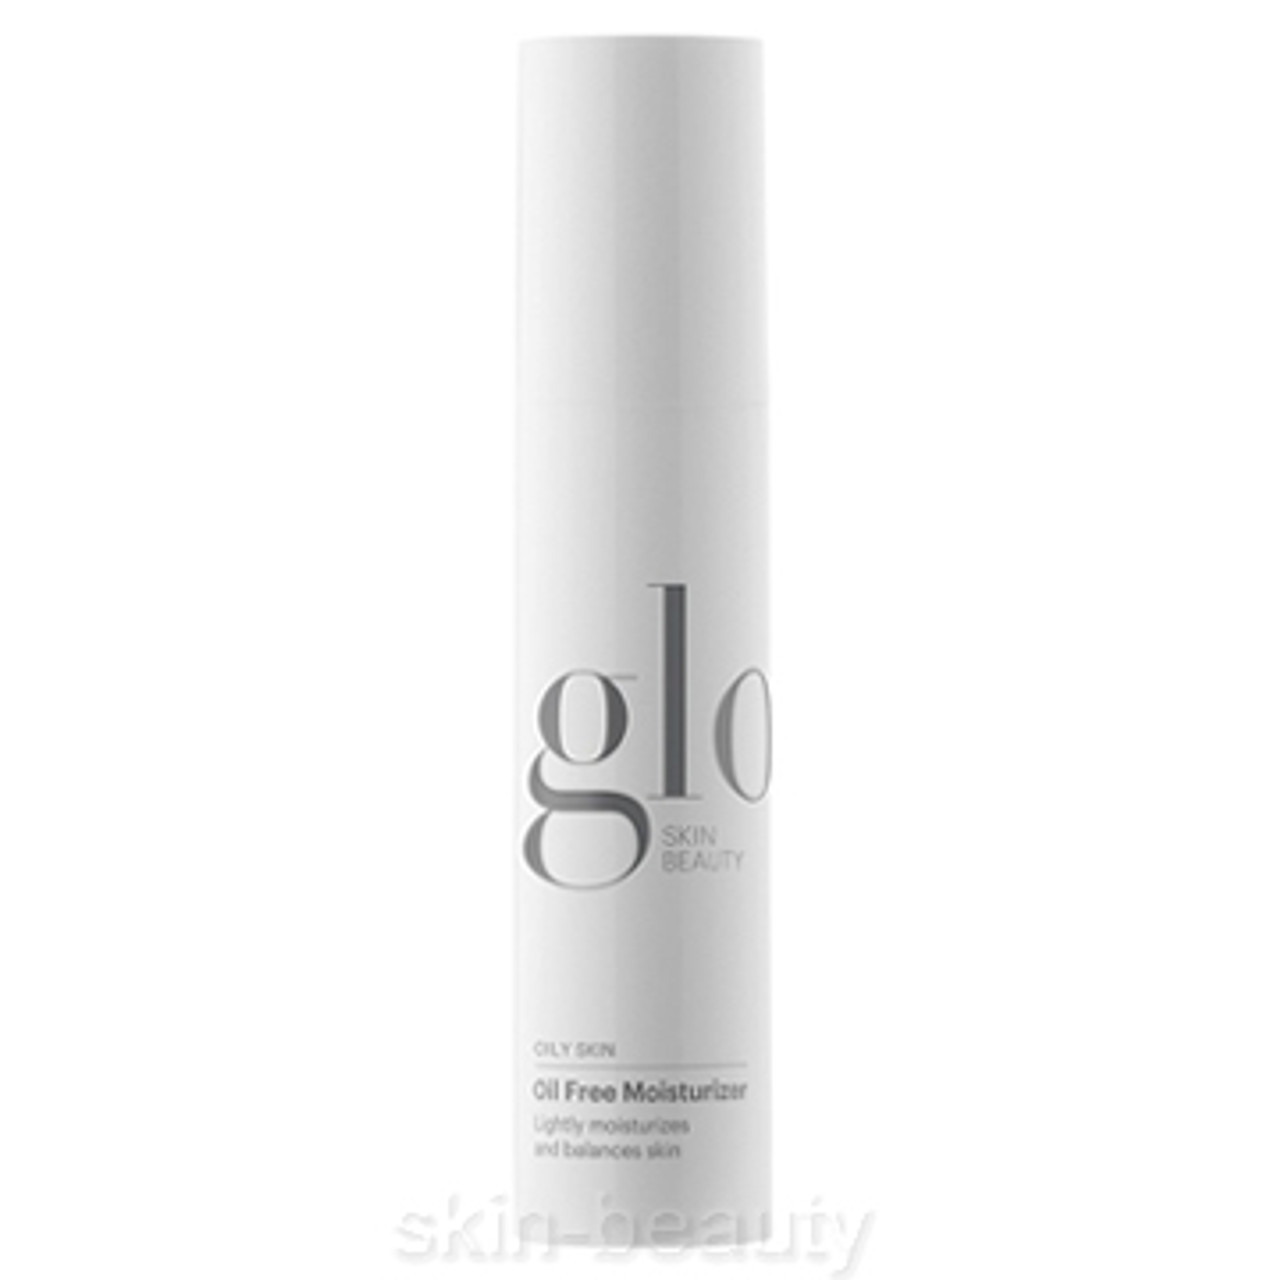 Glo Skin Beauty Oil Free Moisturizer - 1.7 oz (638-1)